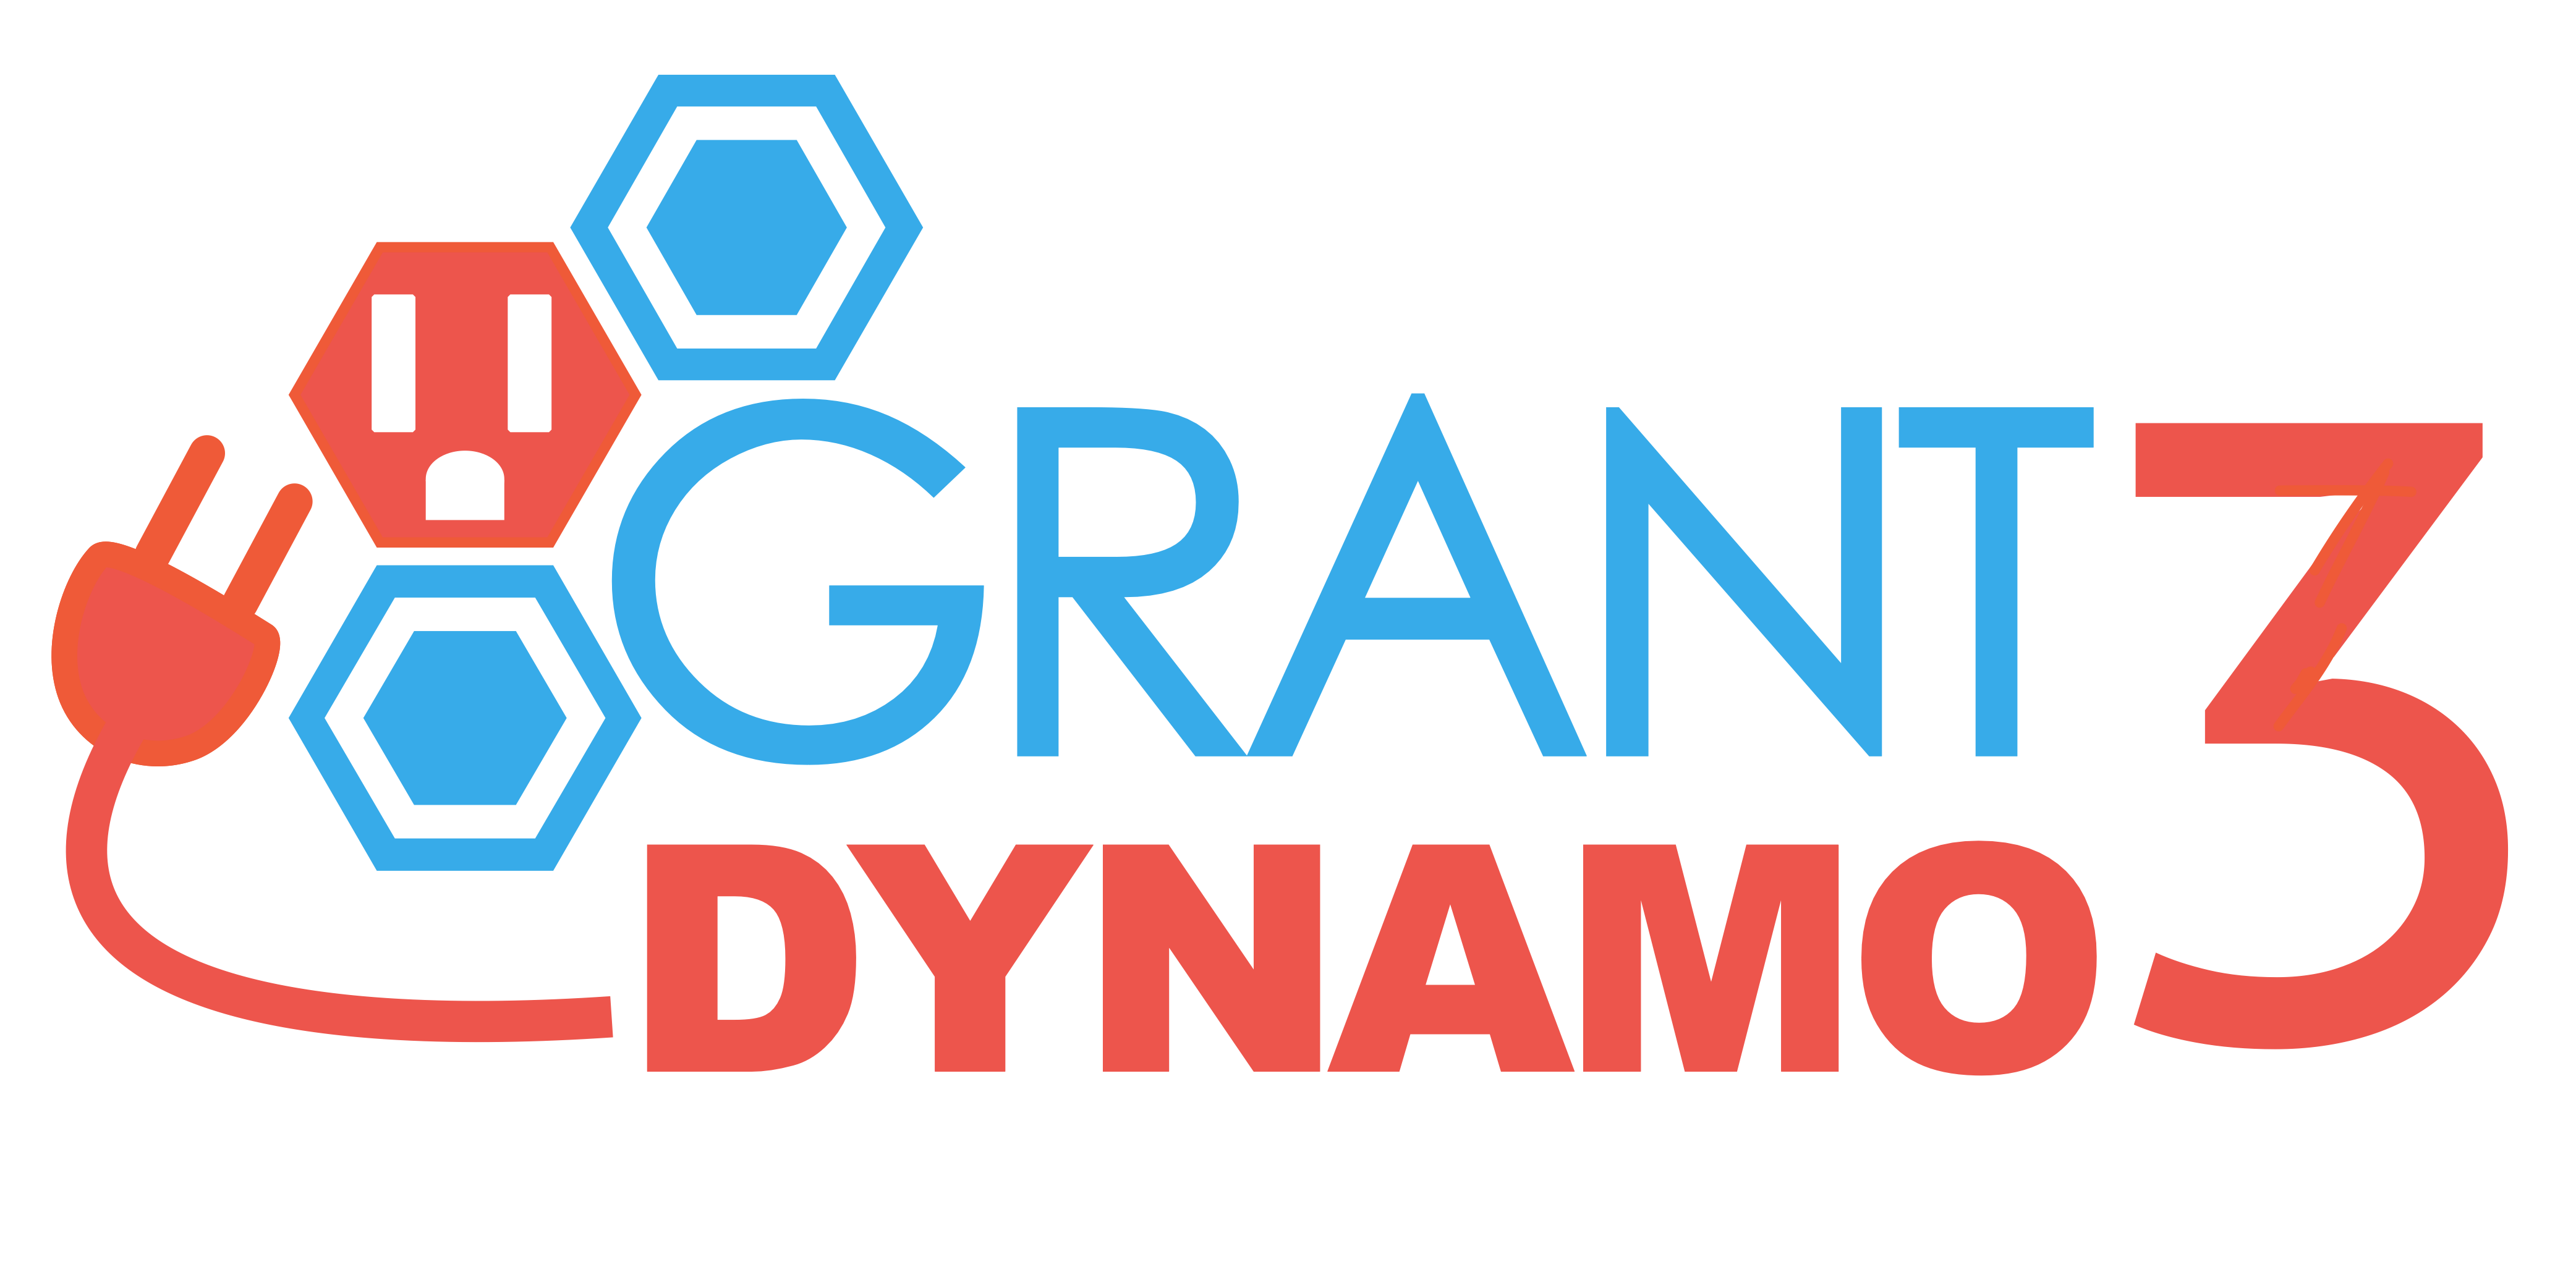 The Grant Dynamo by Morgan Giddings